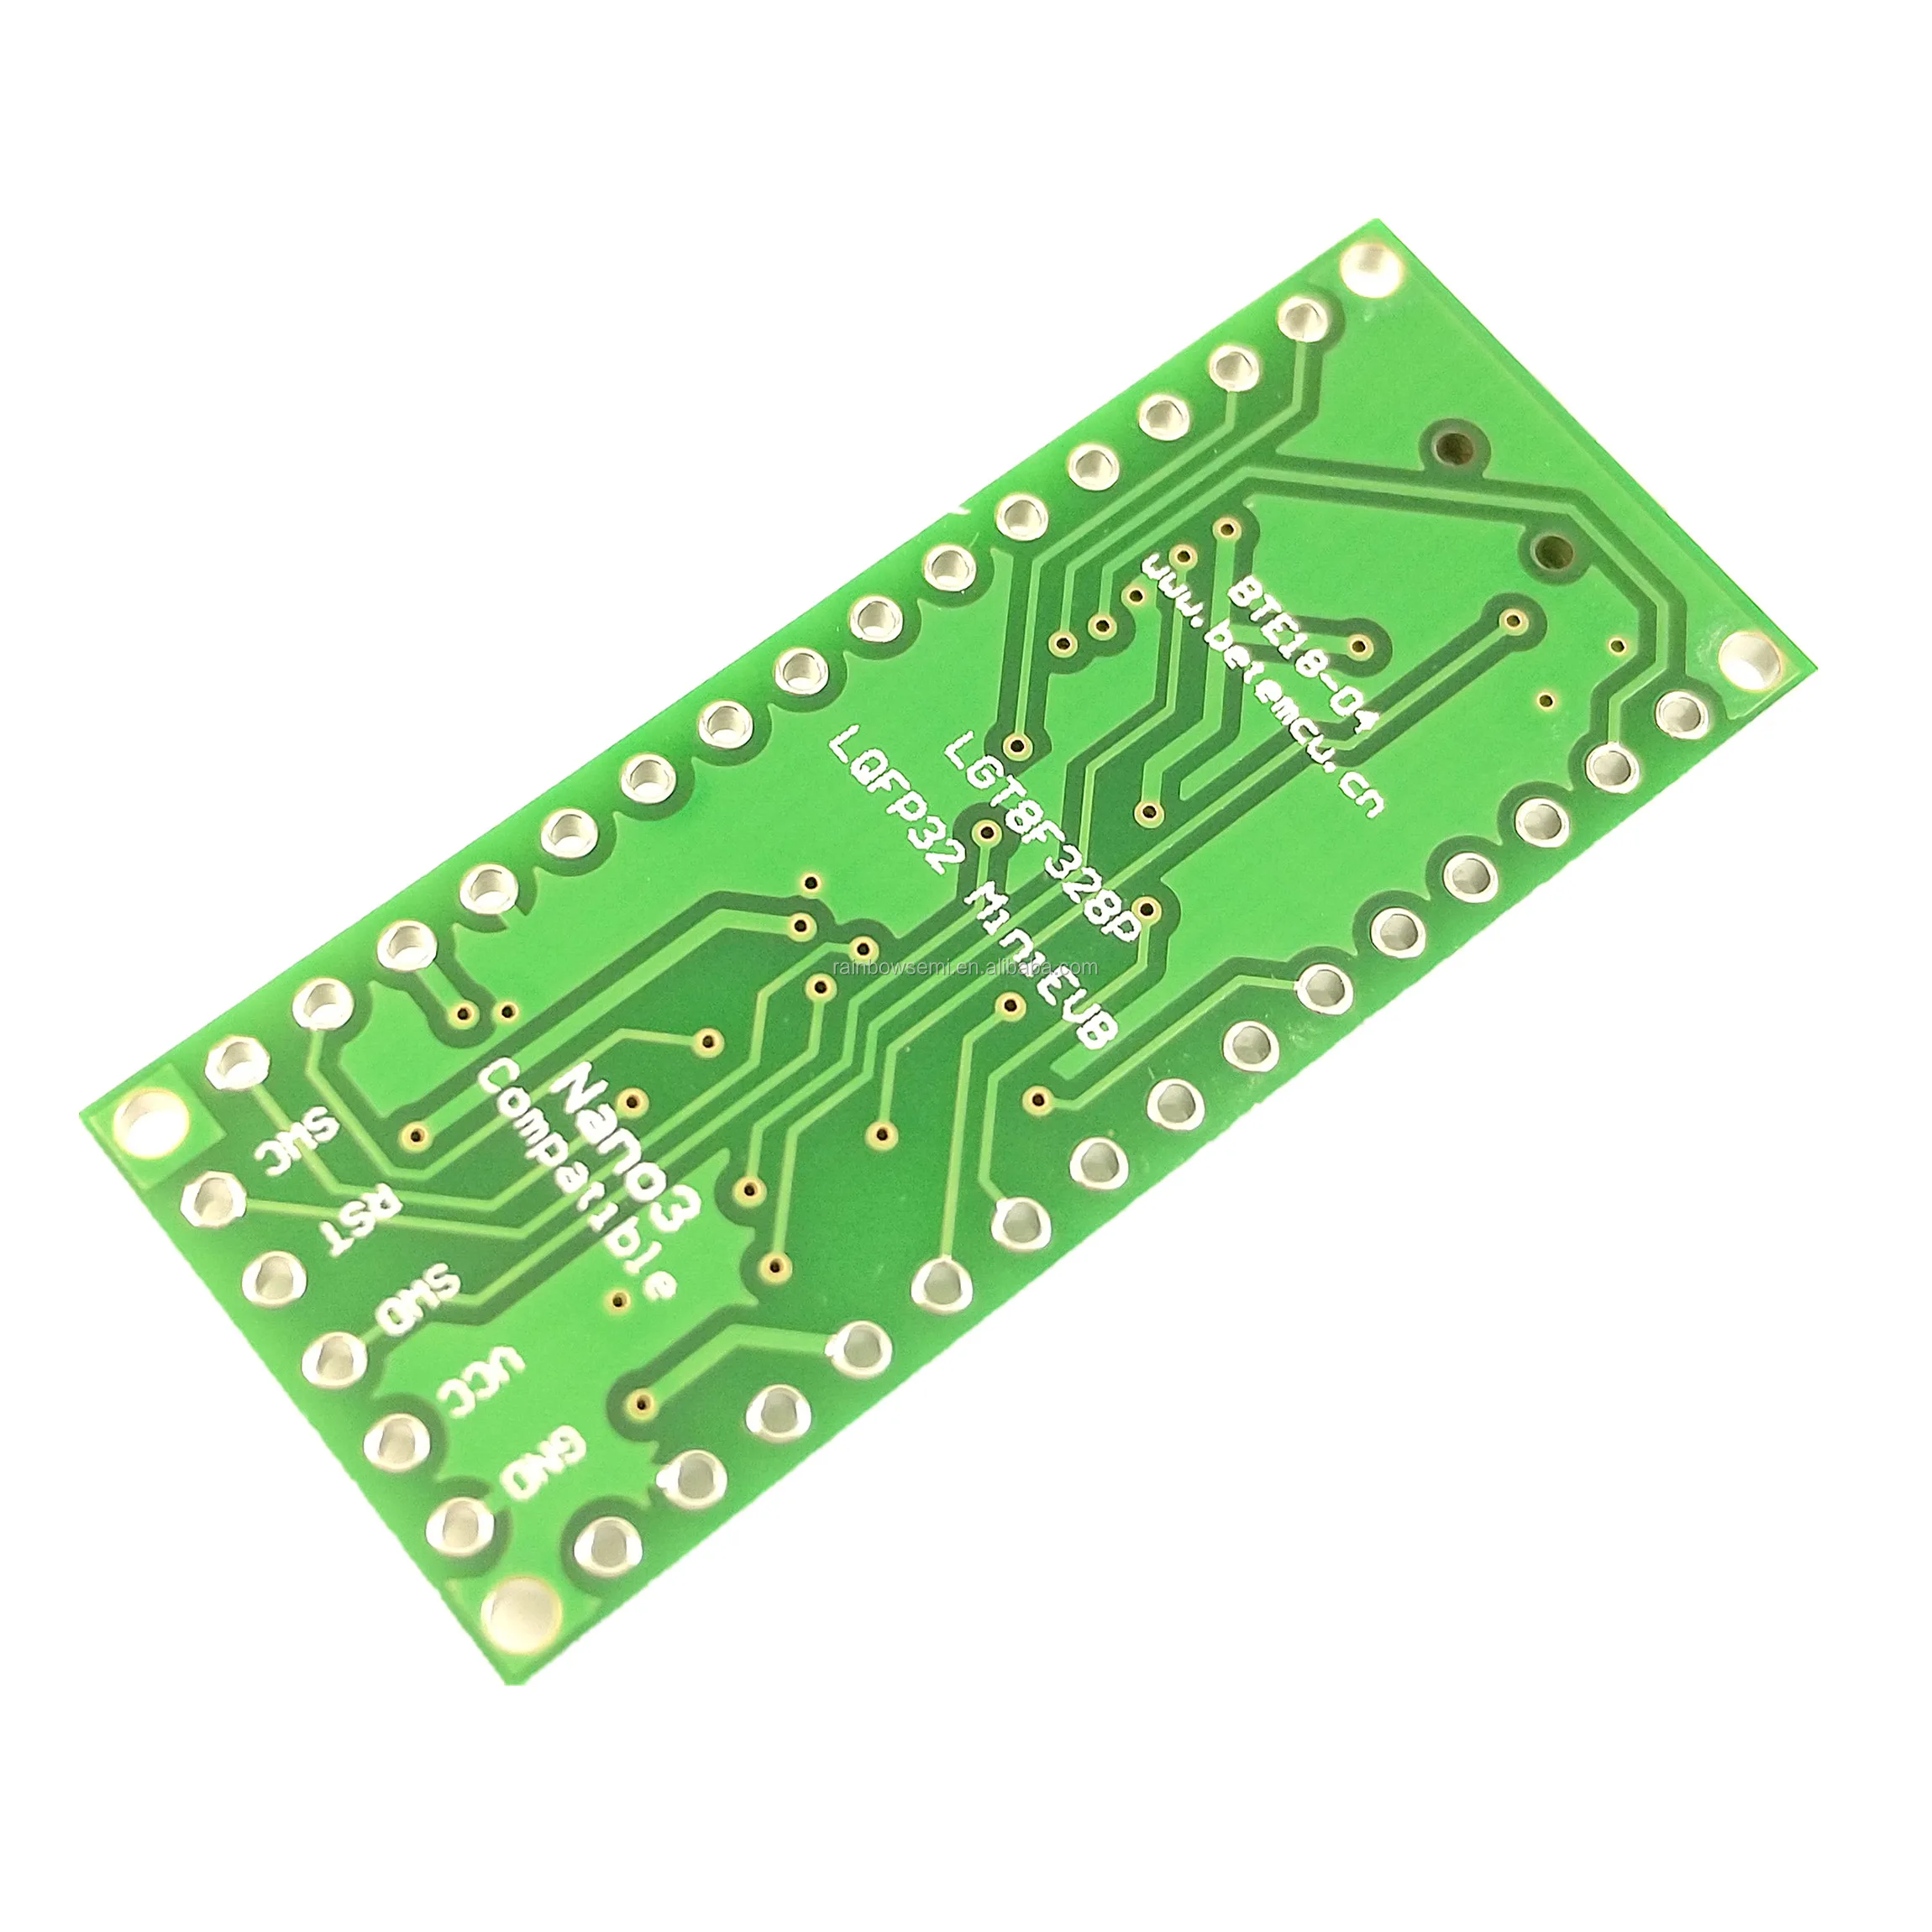 Replaced Chip for arduino NANO V3.0 HT42B534 chip LGT8F328P LQFP32 MiniEVB_wk 